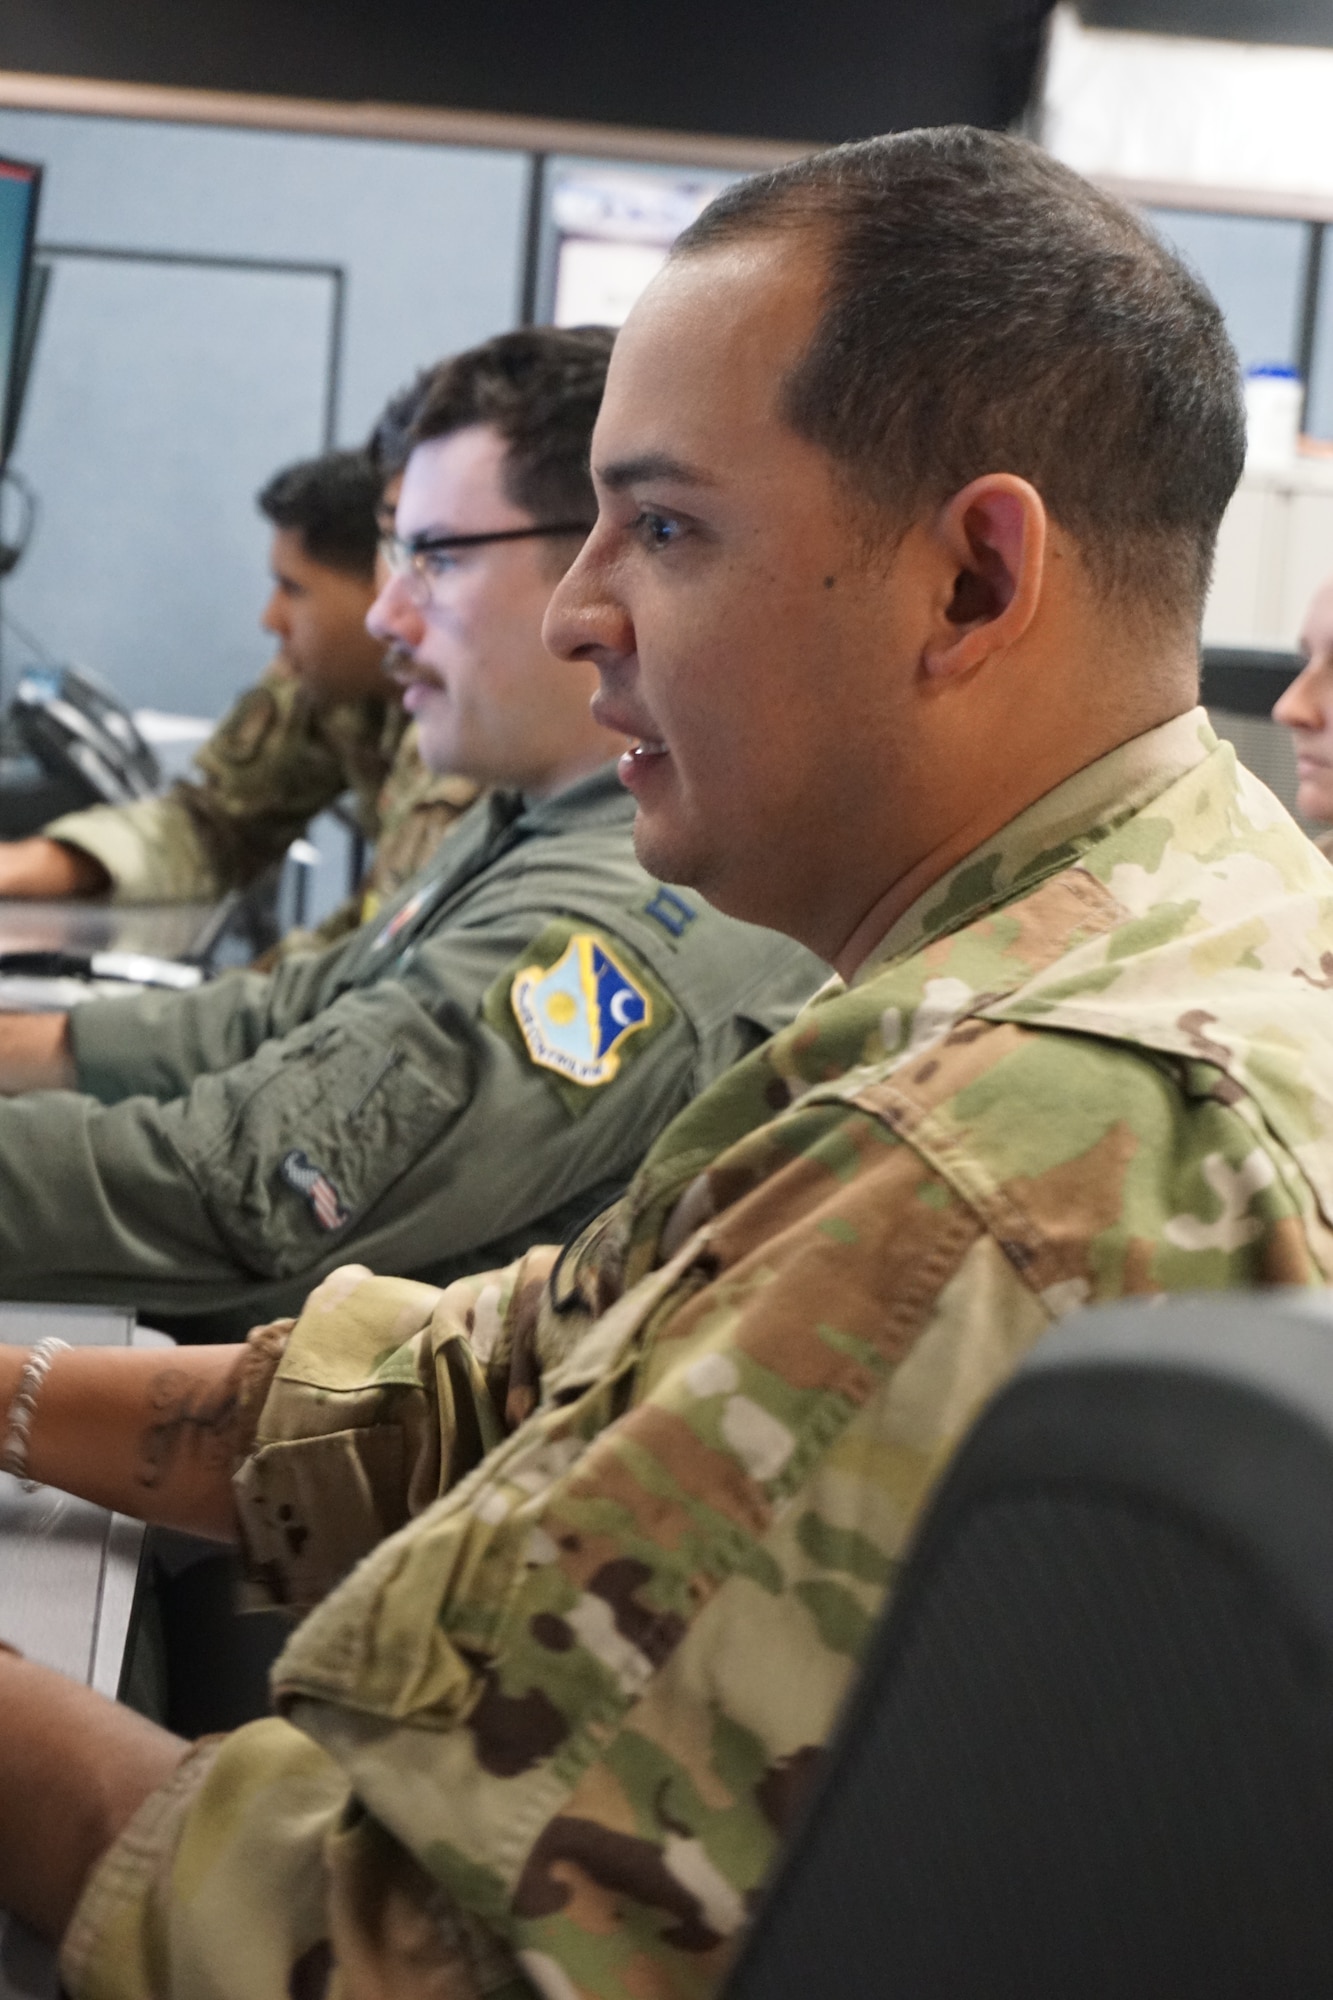 uniformed military members working at computers